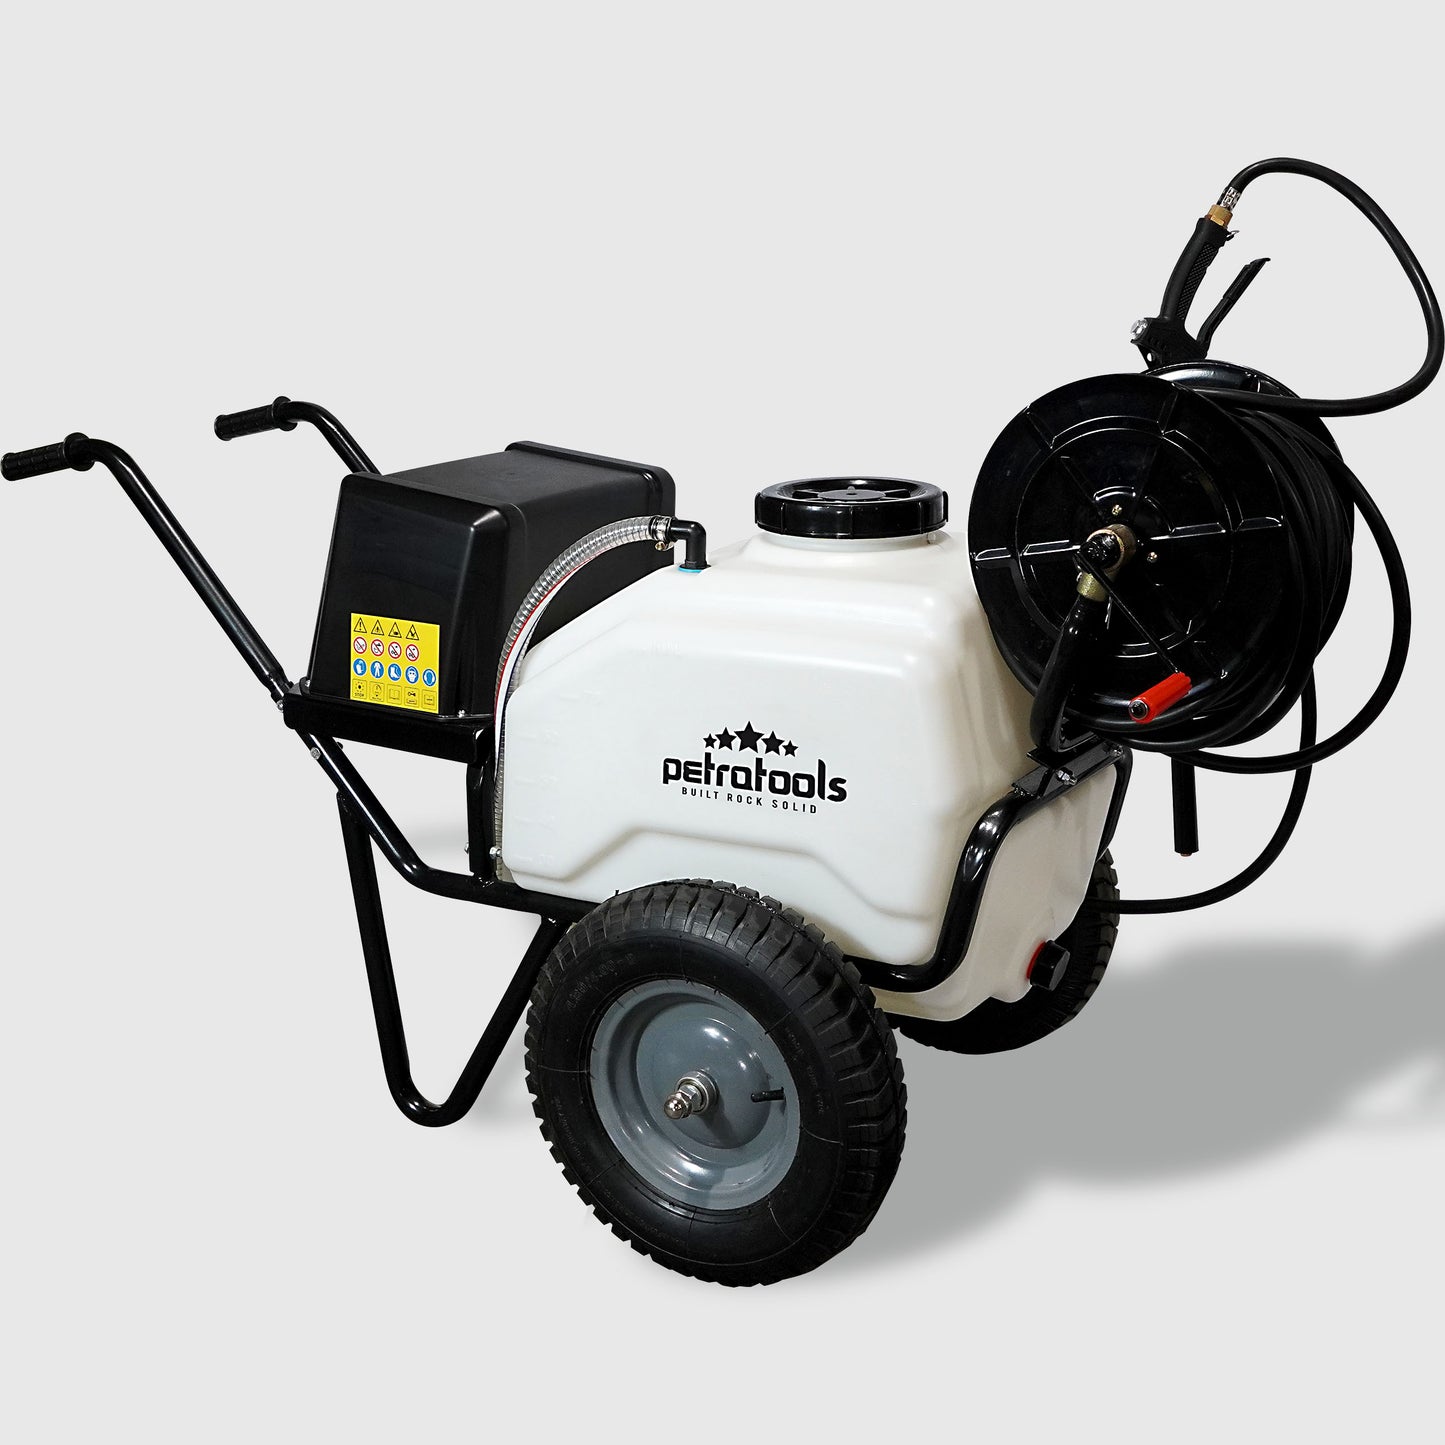 PetraTools HD21000 Wheelbarrow Battery-Powered Sprayer